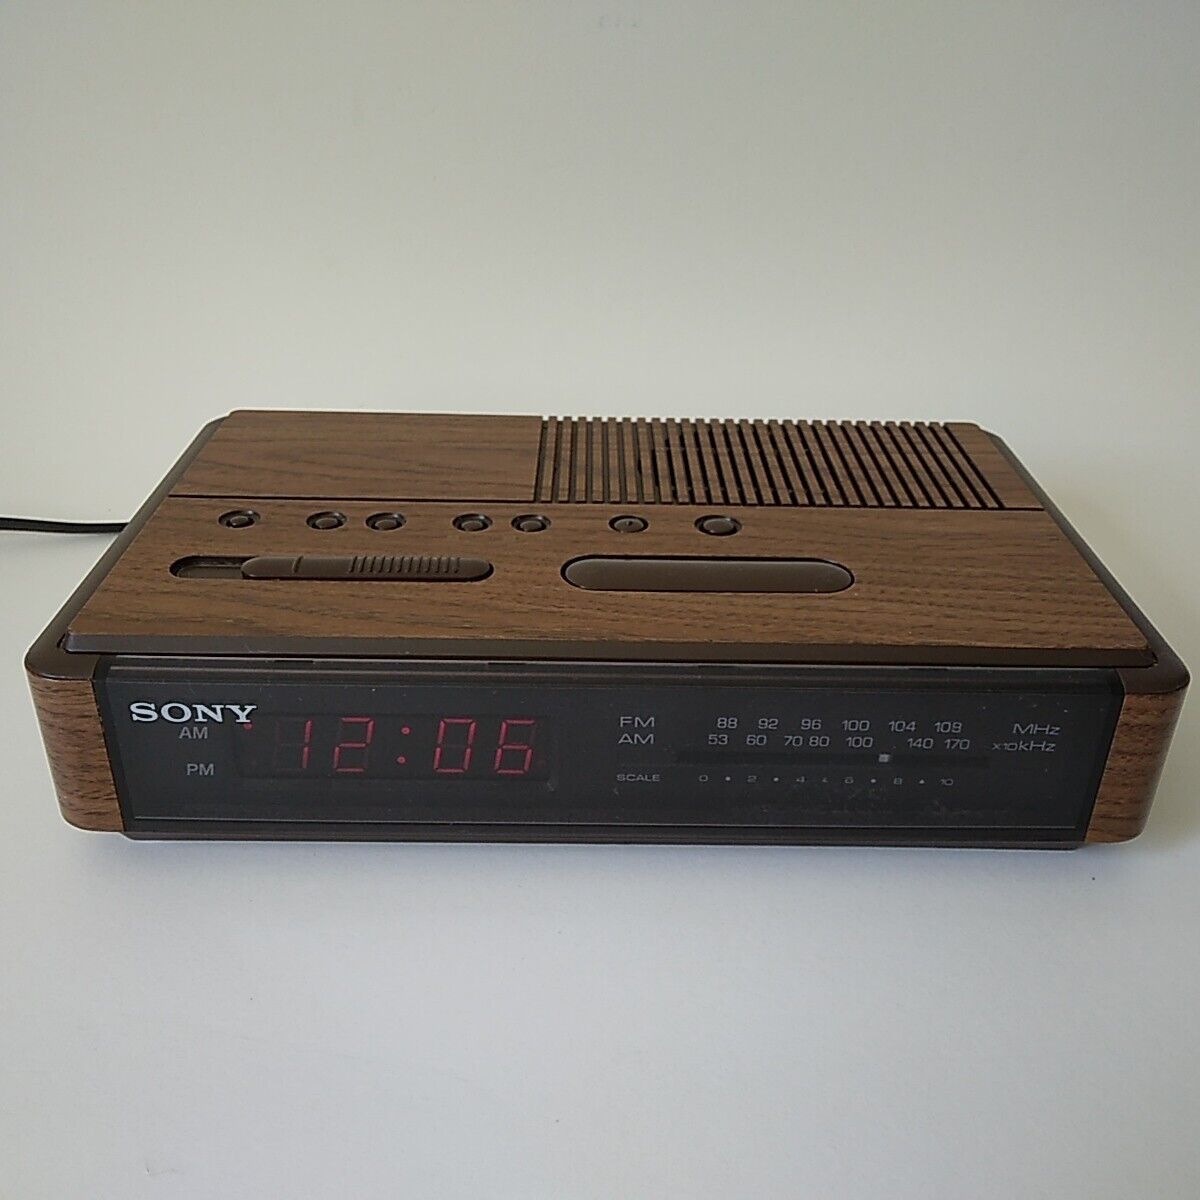 Sony Dream Machine ICF-C400 Radio Alarm Clock-1980-AM FM-Corded-Tested Works